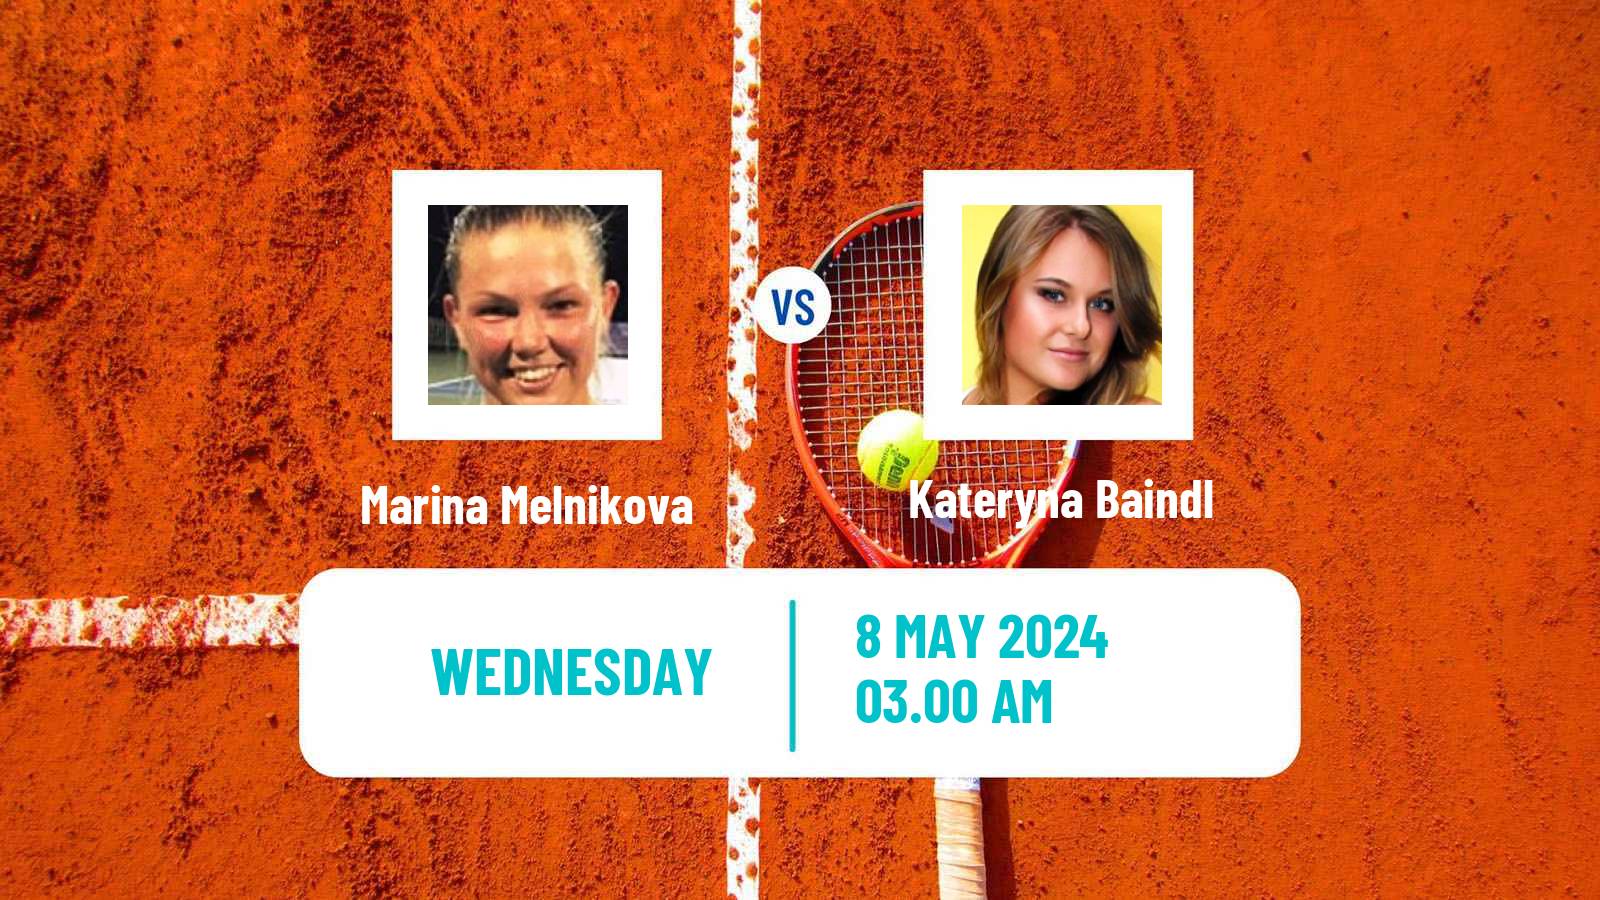 Tennis ITF W75 Prague Women Marina Melnikova - Kateryna Baindl